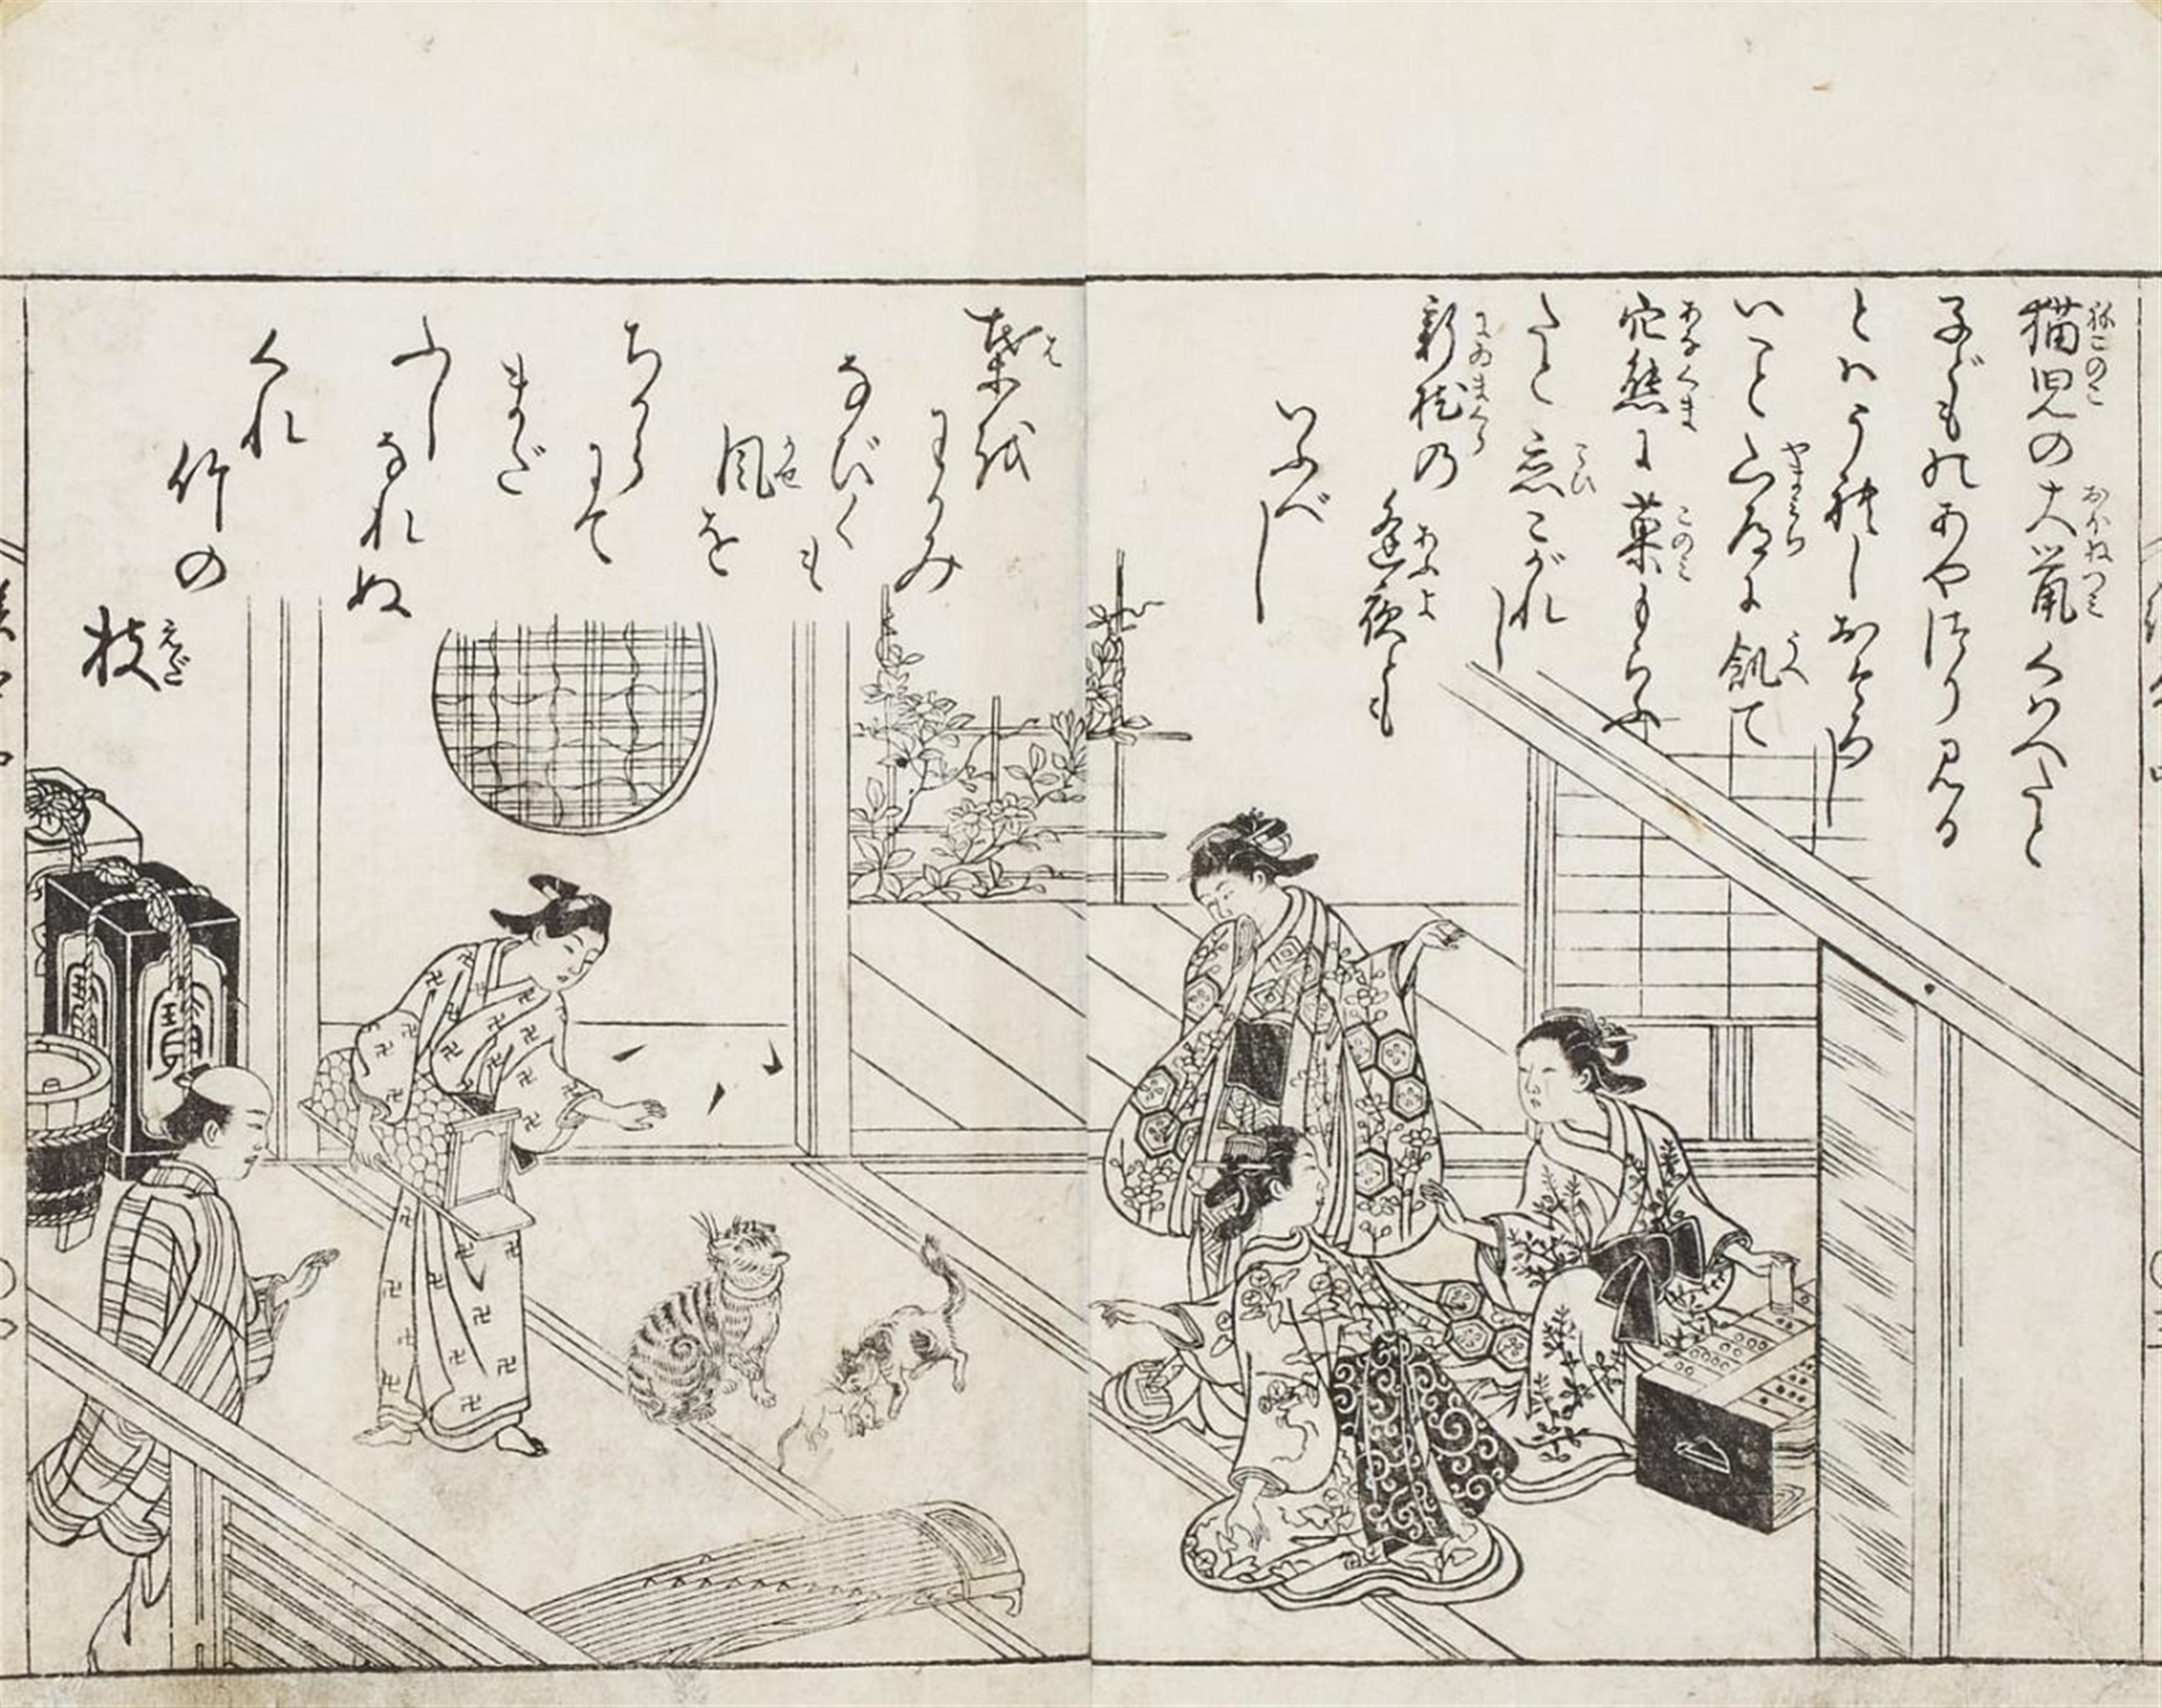 Sukenobu Nishikawa
other artists - Nishikawa Sukenobu (1671-1751) and other artists of the 18th century - image-6